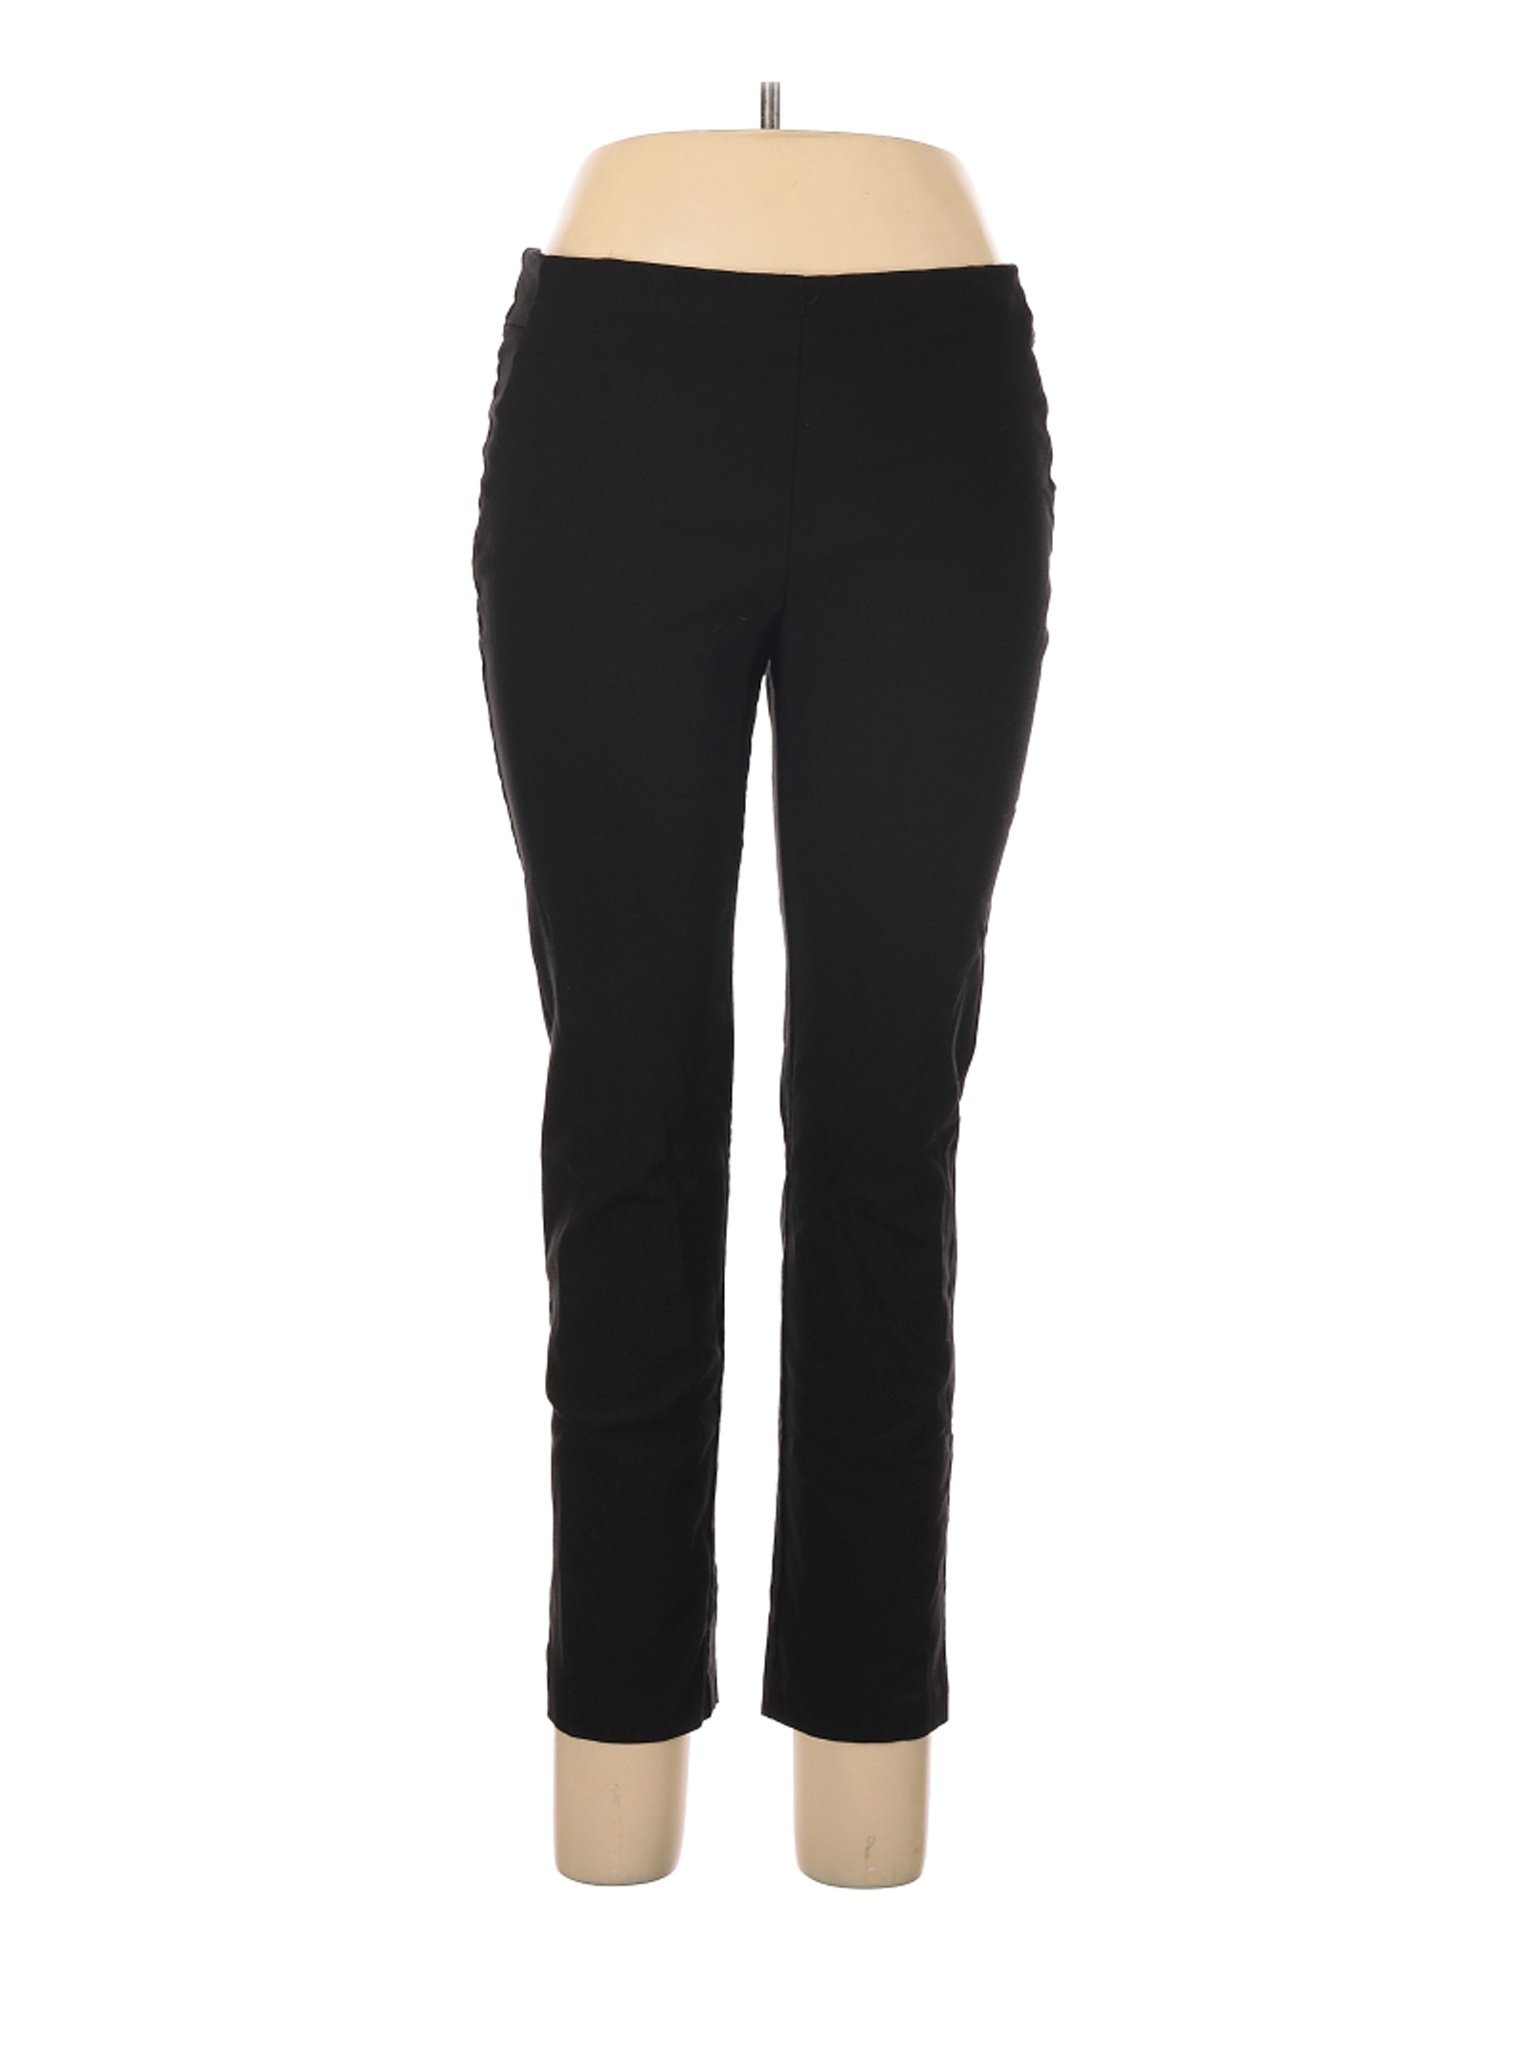 SOHO Apparel Ltd Women Black Dress Pants L | eBay